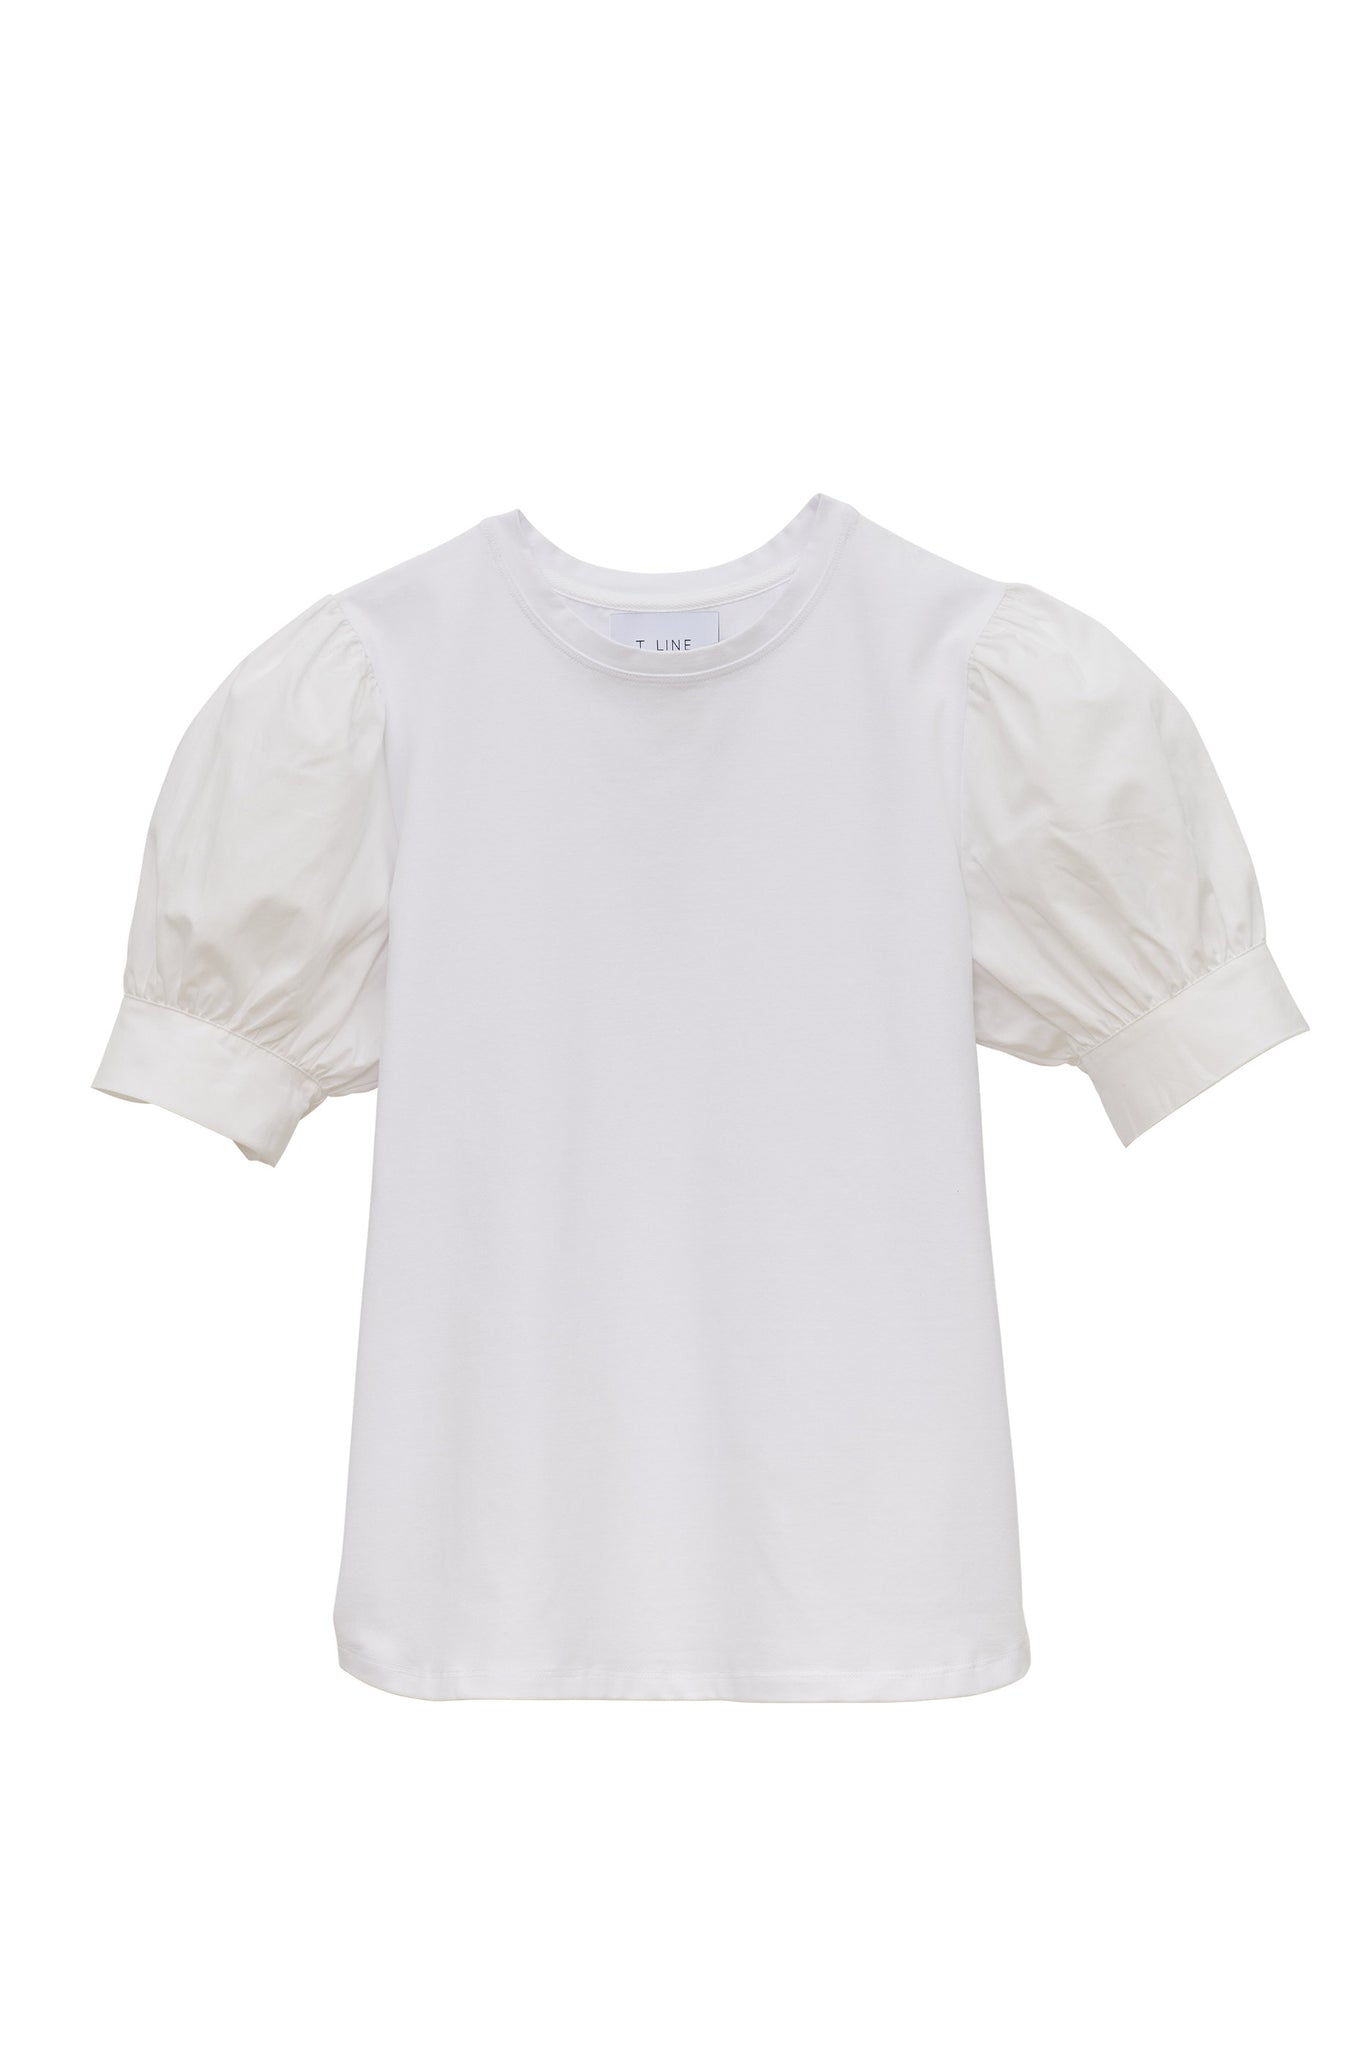 Rowan T-Shirt | T. Line – T.LINE